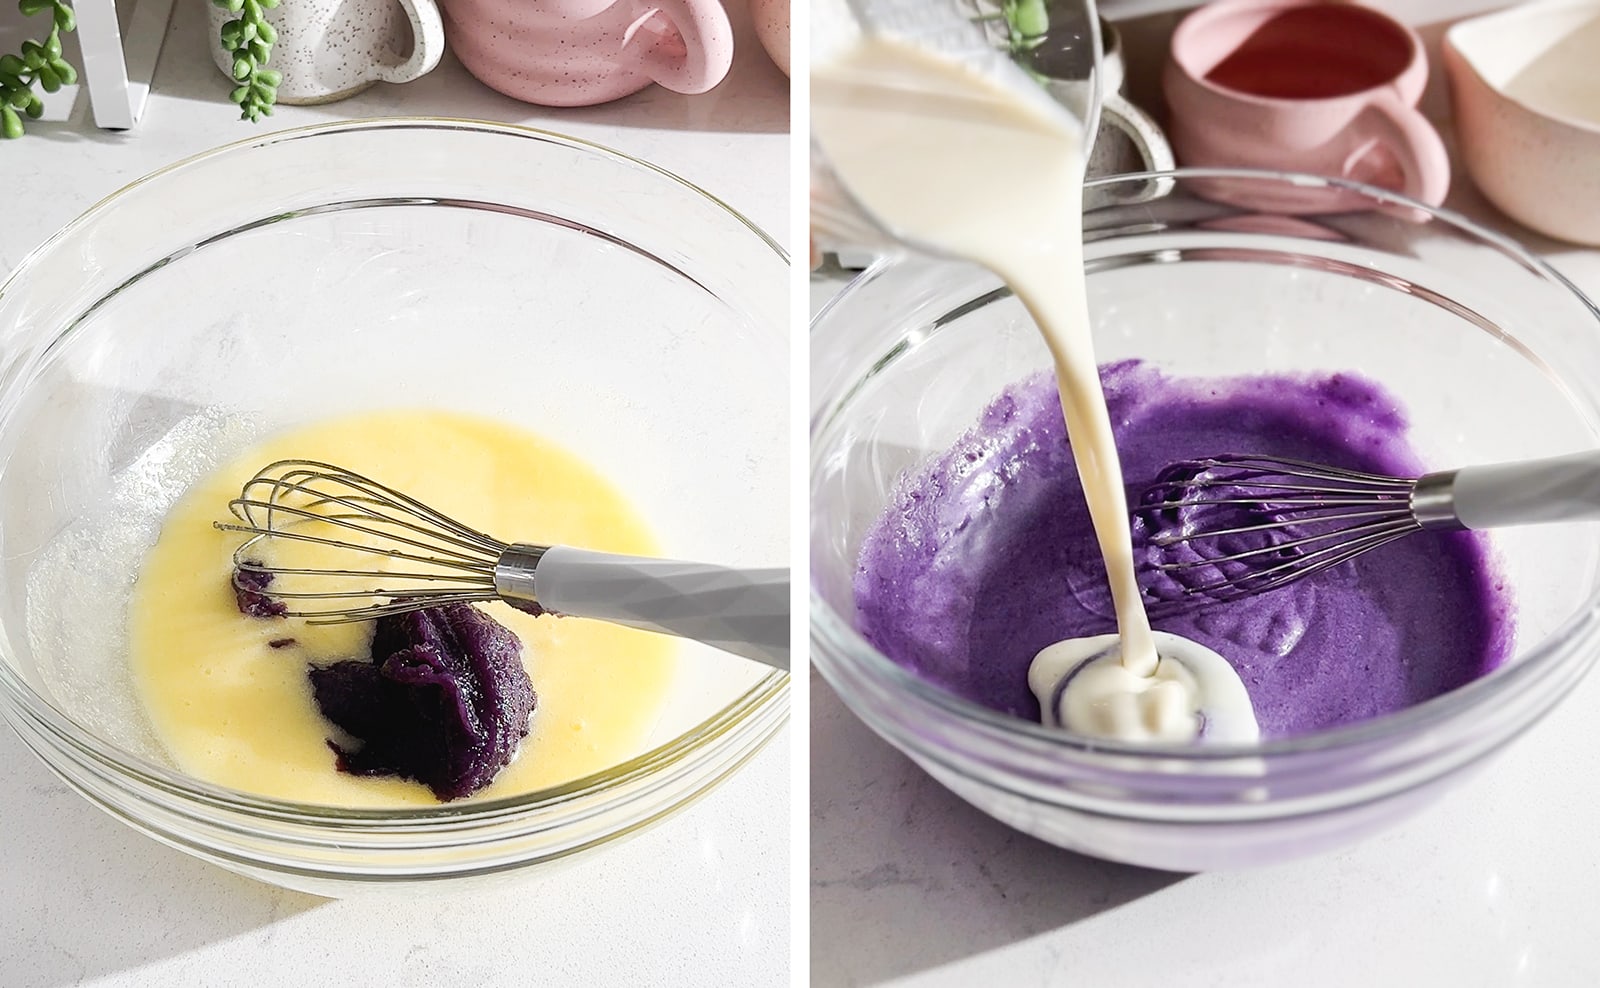 Left to right: scoop of ube halaya jam in egg mixture, pouring milk into purple batter.